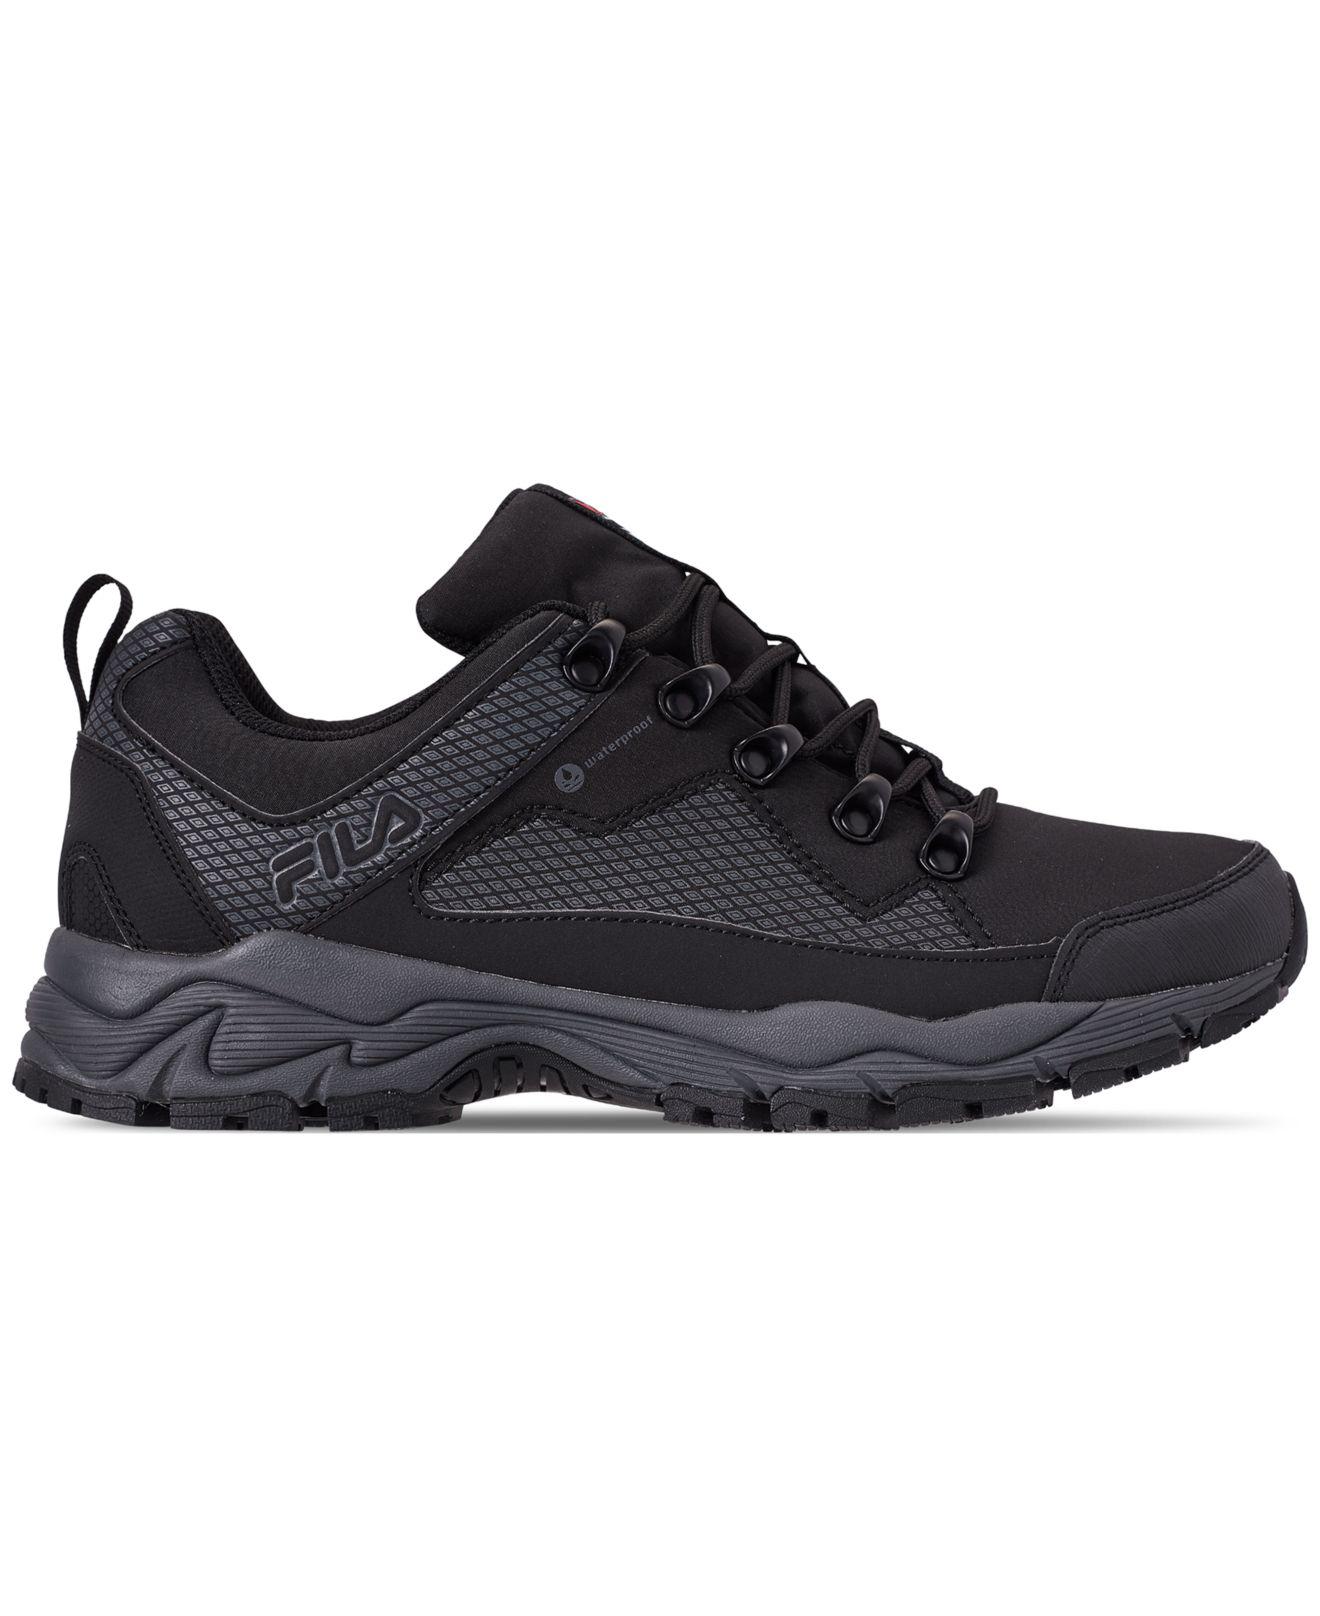 Fila Rubber Switchback 2 Sneaker in Black/Grey (Black) for Men - Lyst